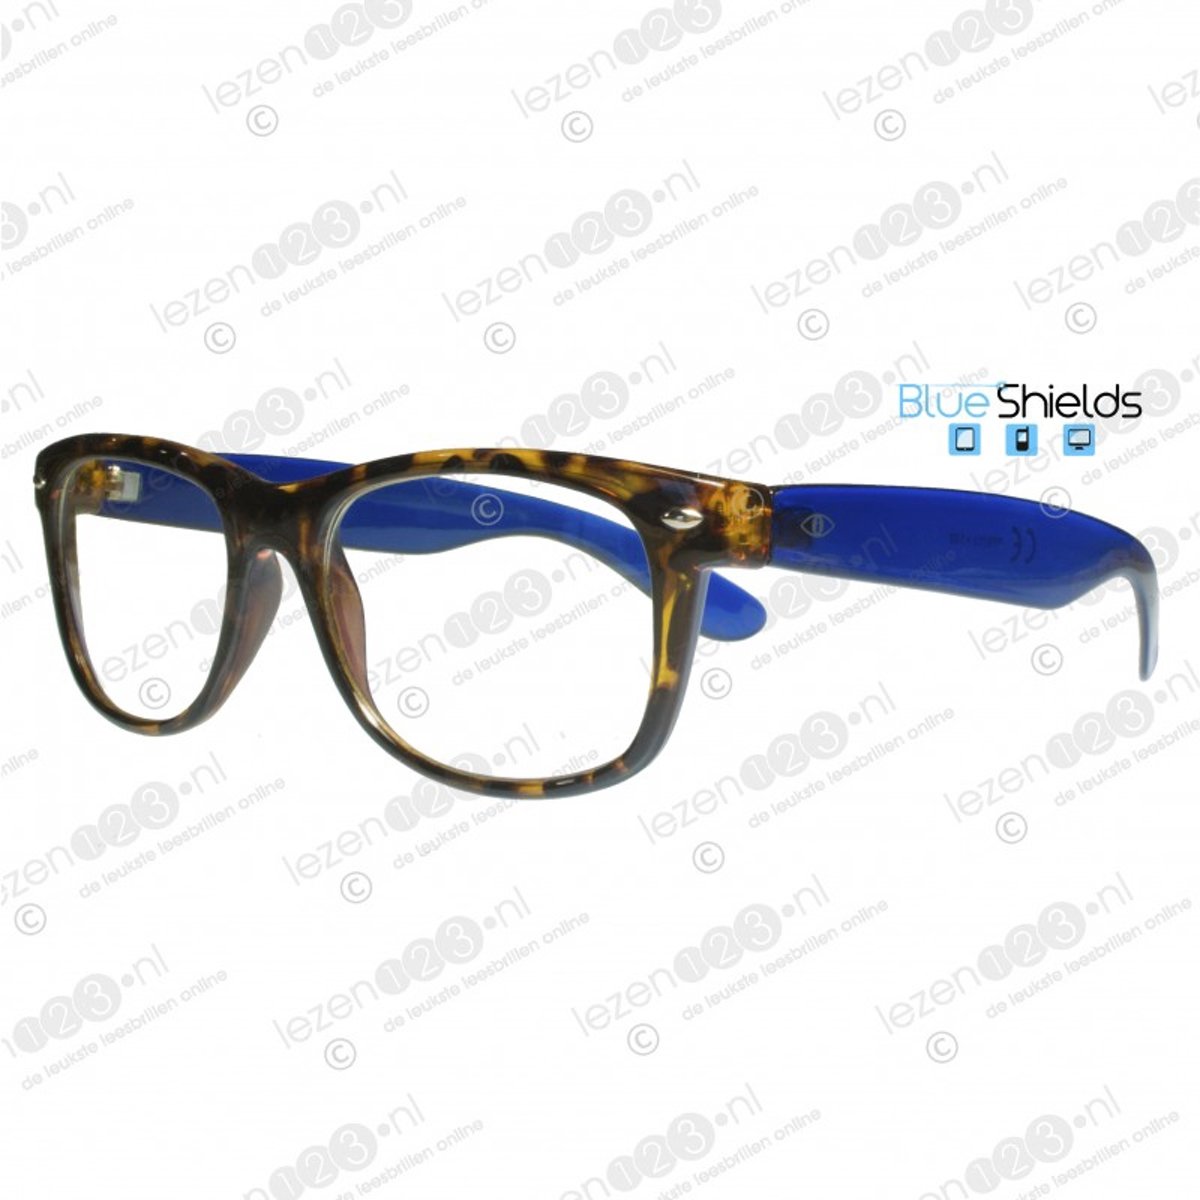 Foto van Icon Eyewear RFE013 +2.00 WayeFarer BlueShields bril - blauw licht filter lens - Tortoise montuur, blauwe poten